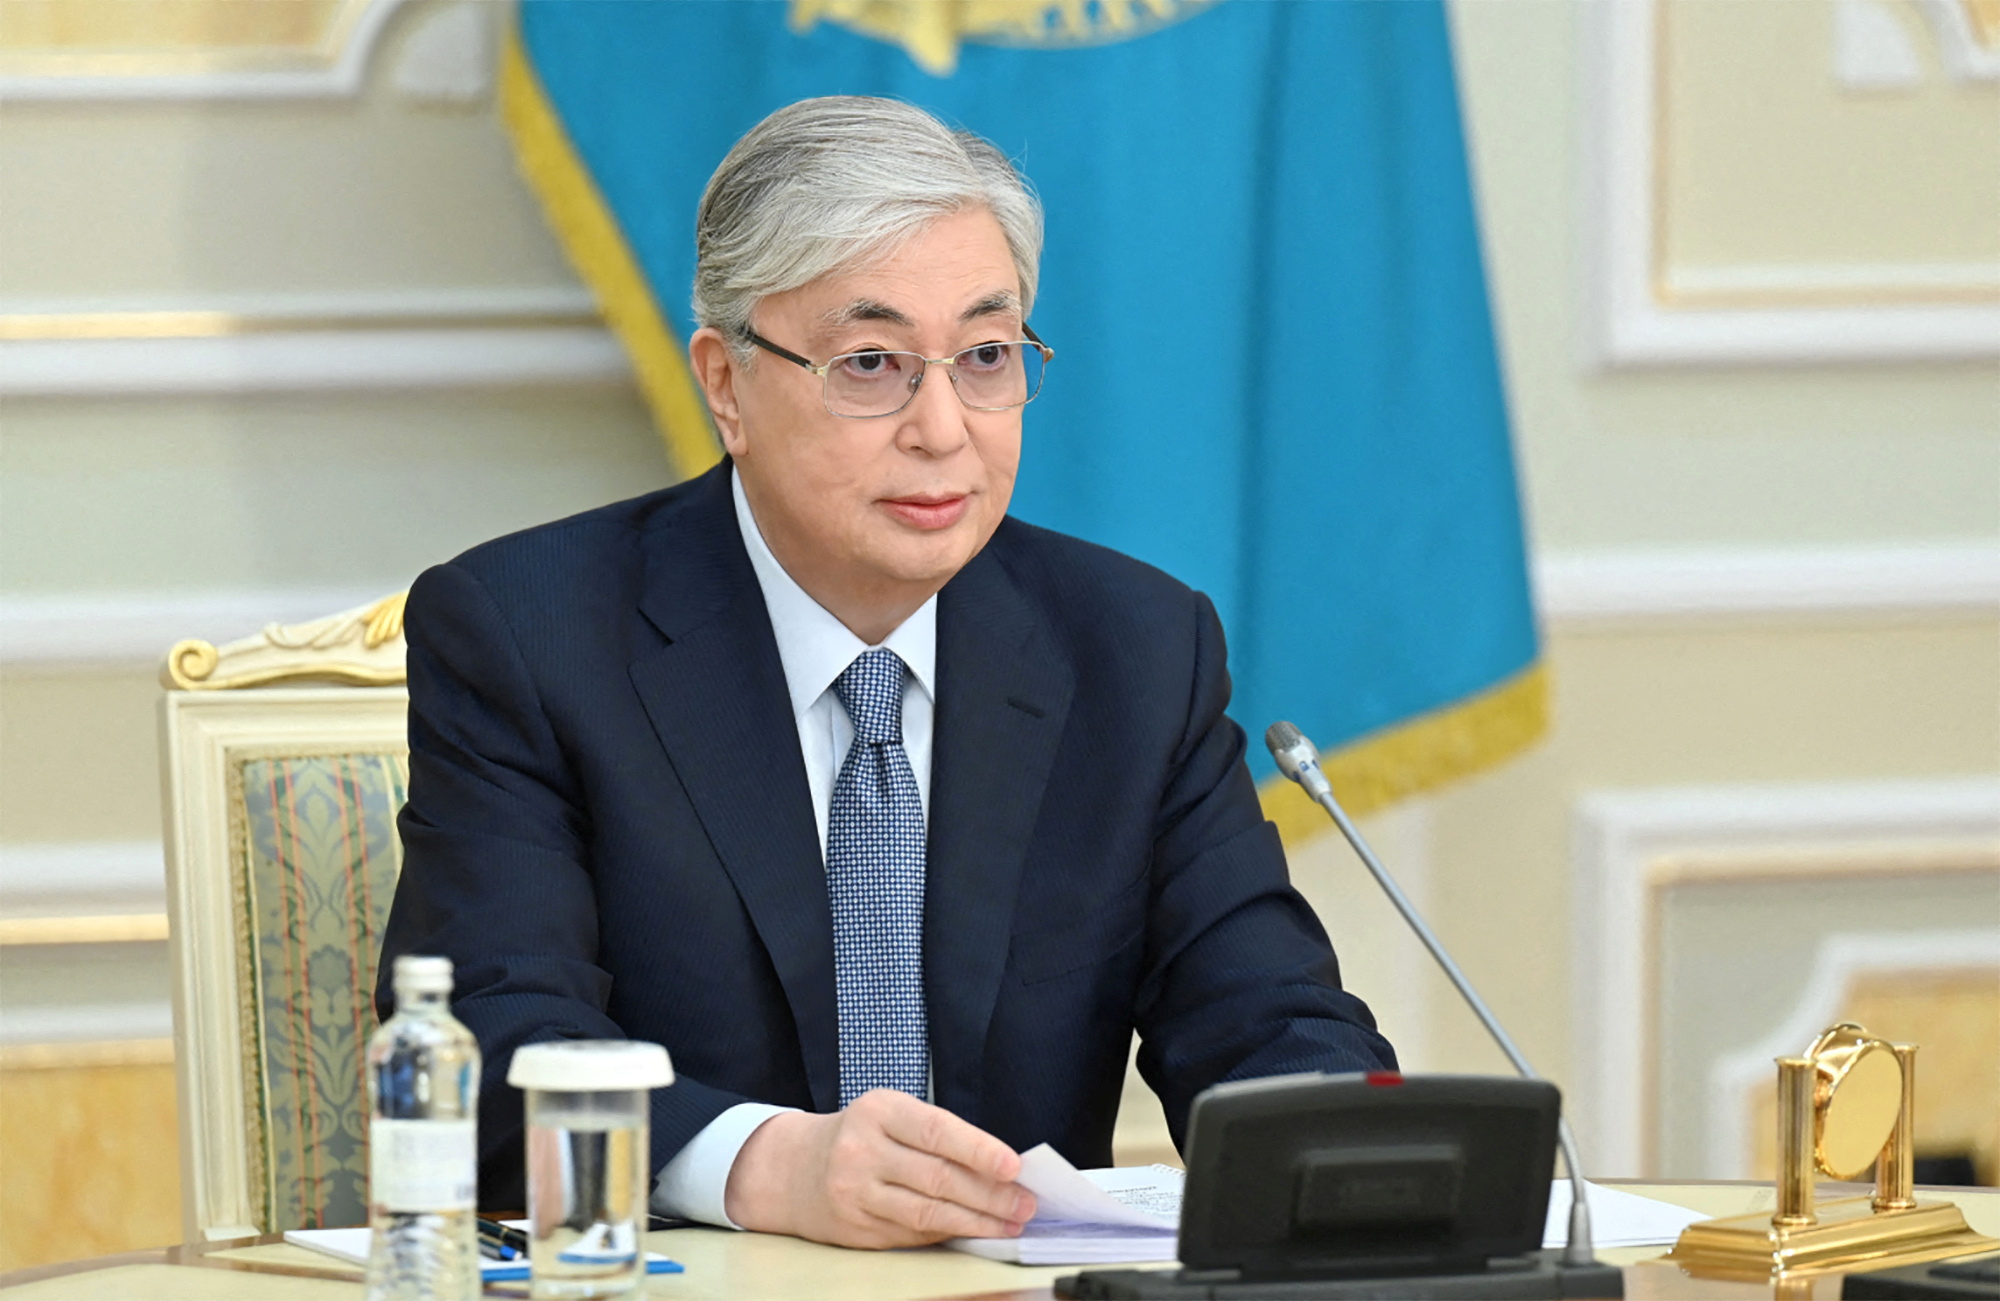 Kazakh President Kassym-Jomart Tokayev attends a session of parliament in Nur-Sultan